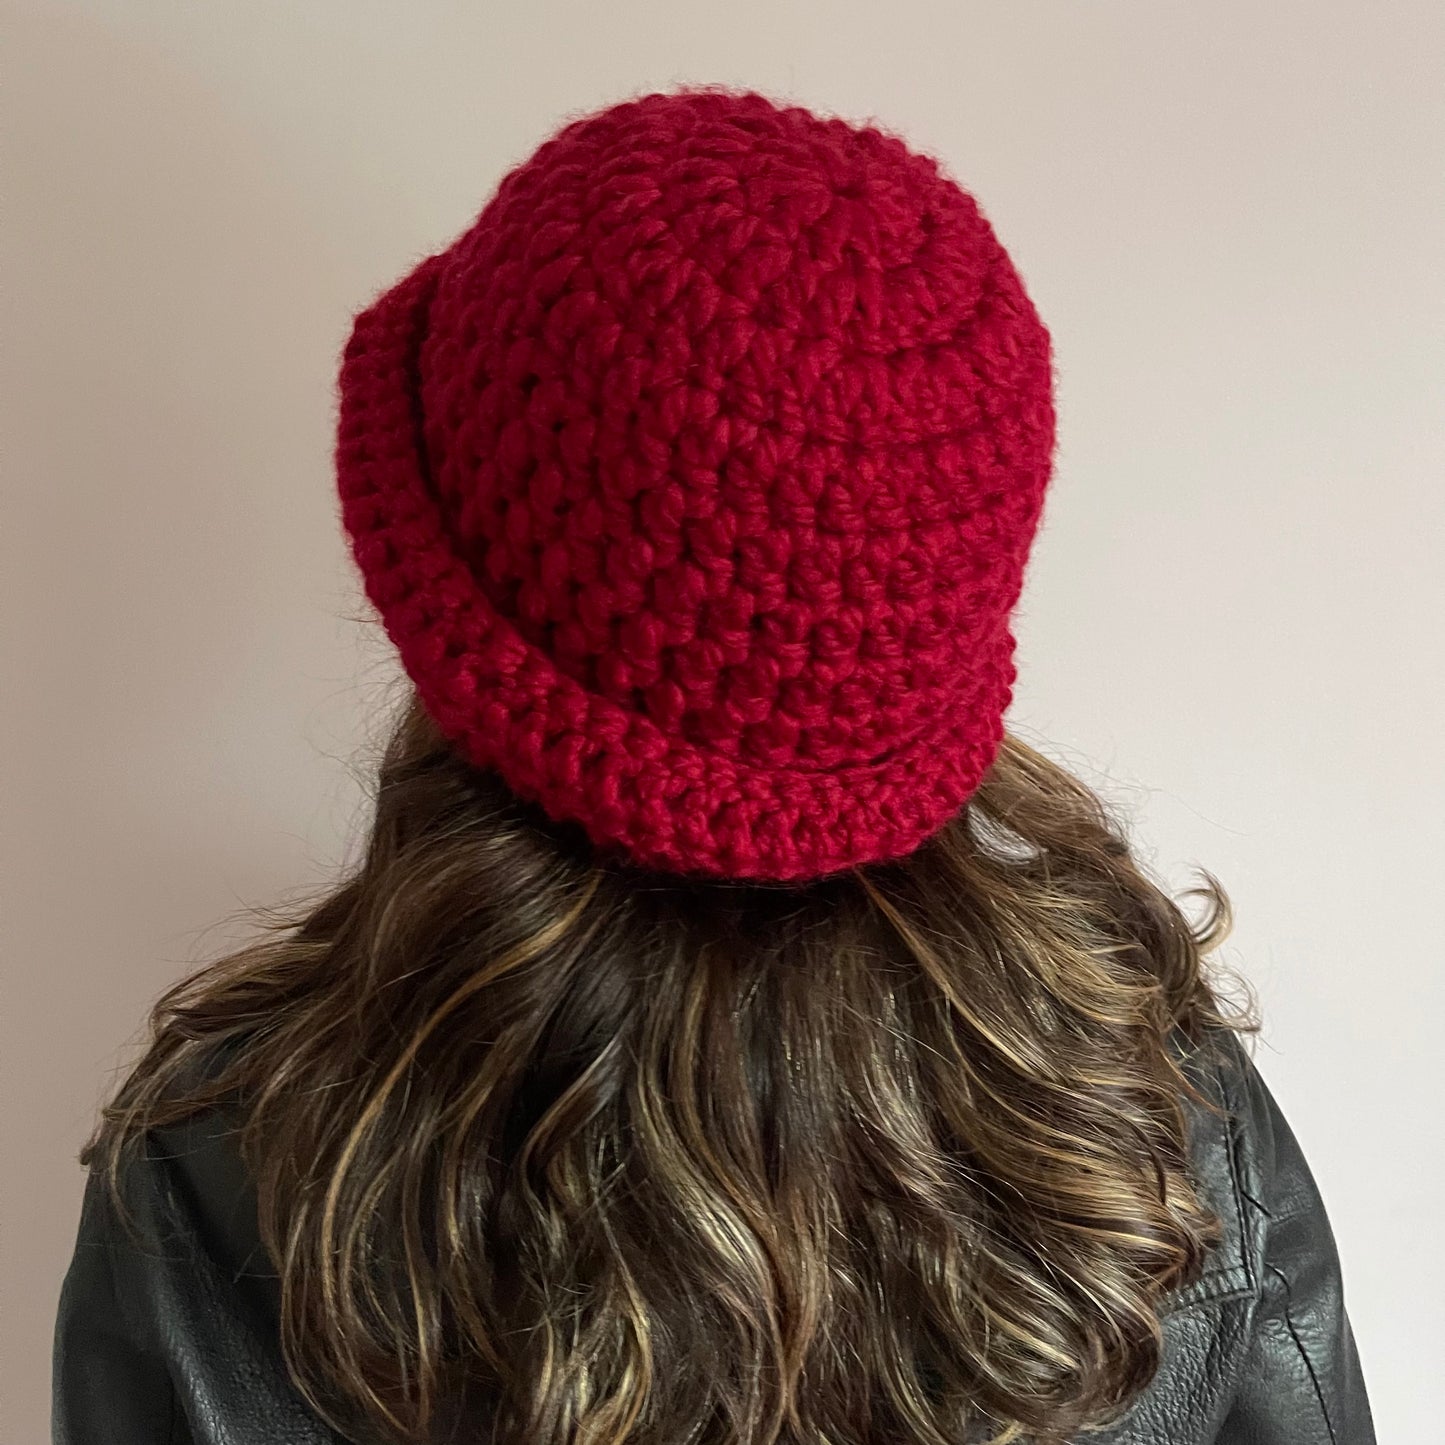 Handmade dark red chunky crochet bowler hat